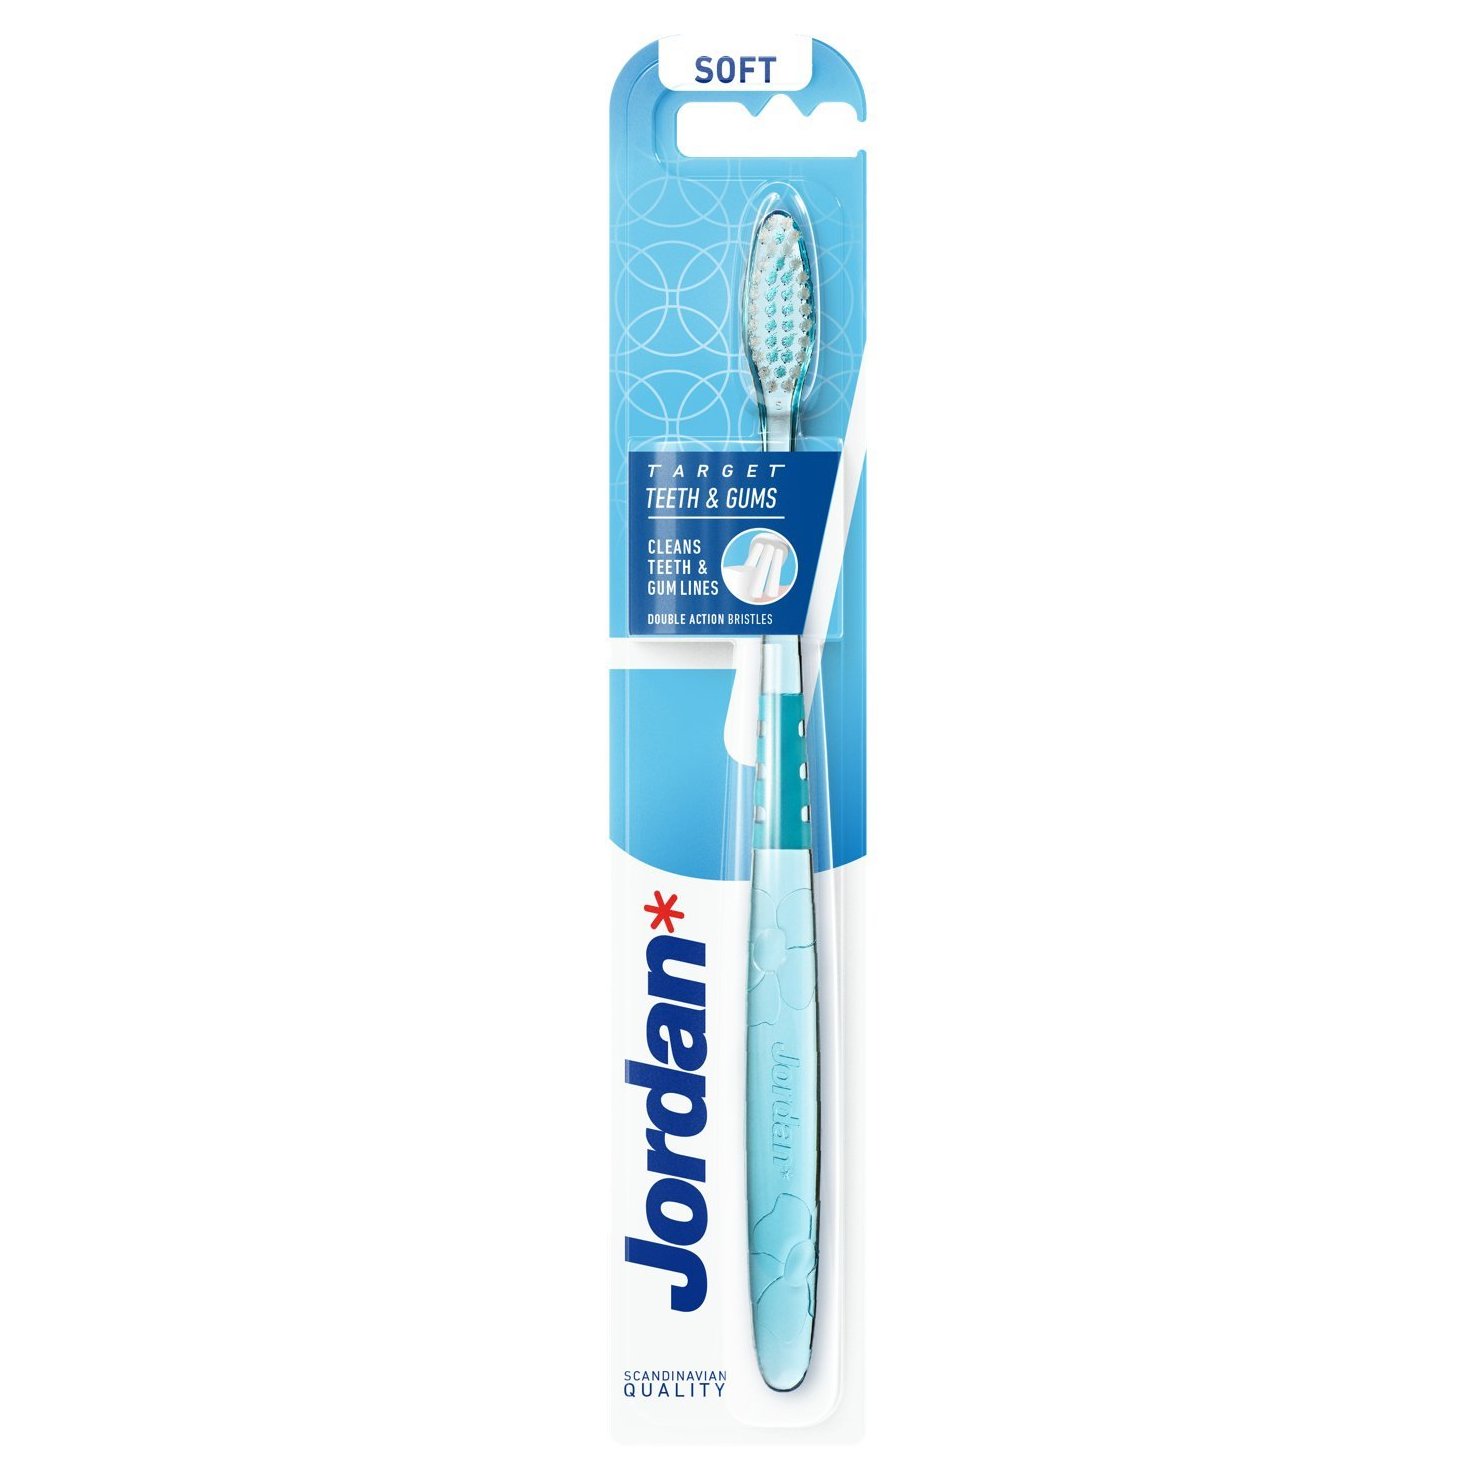 Jordan Target Teeth & Gums Toothbrush Soft Μαλακή Οδοντόβουρτσα για Βαθύ Καθαρισμό 1 Τεμάχιο – Γαλάζιο